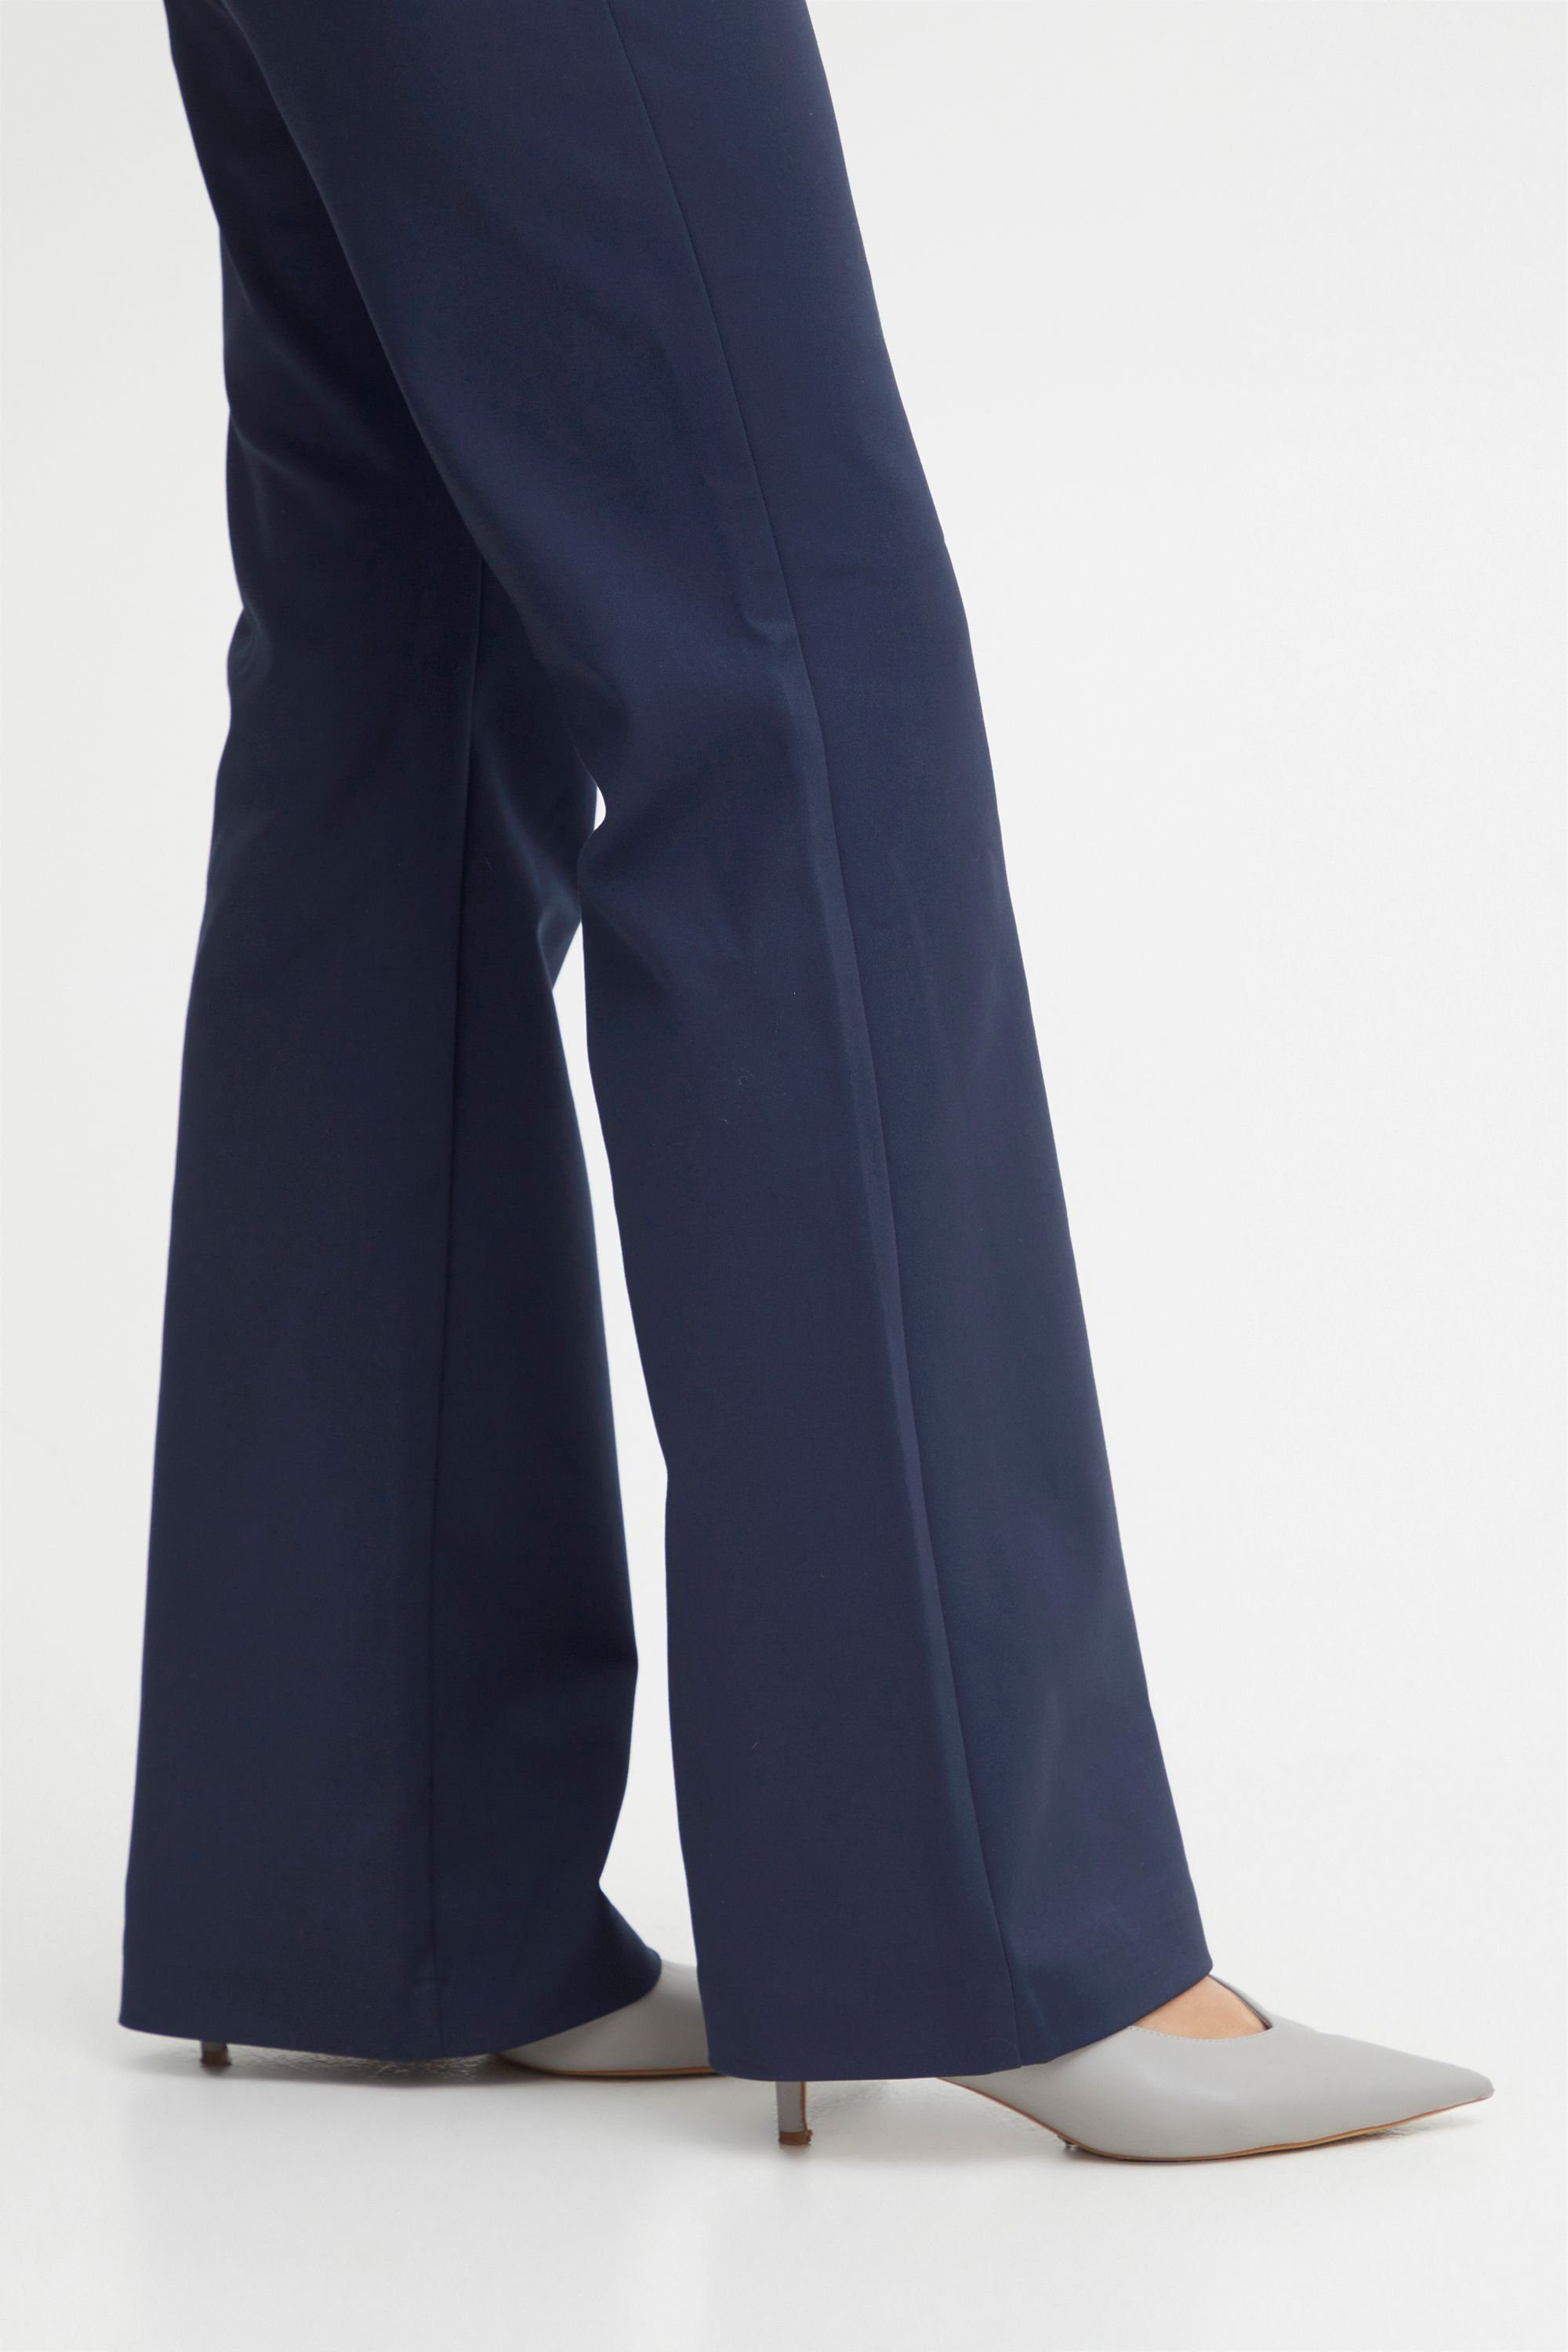 PZBINDY 50207207 Bootcut Pants Pulz Schlaghose Jeans HW Sapphire Dark (194020)